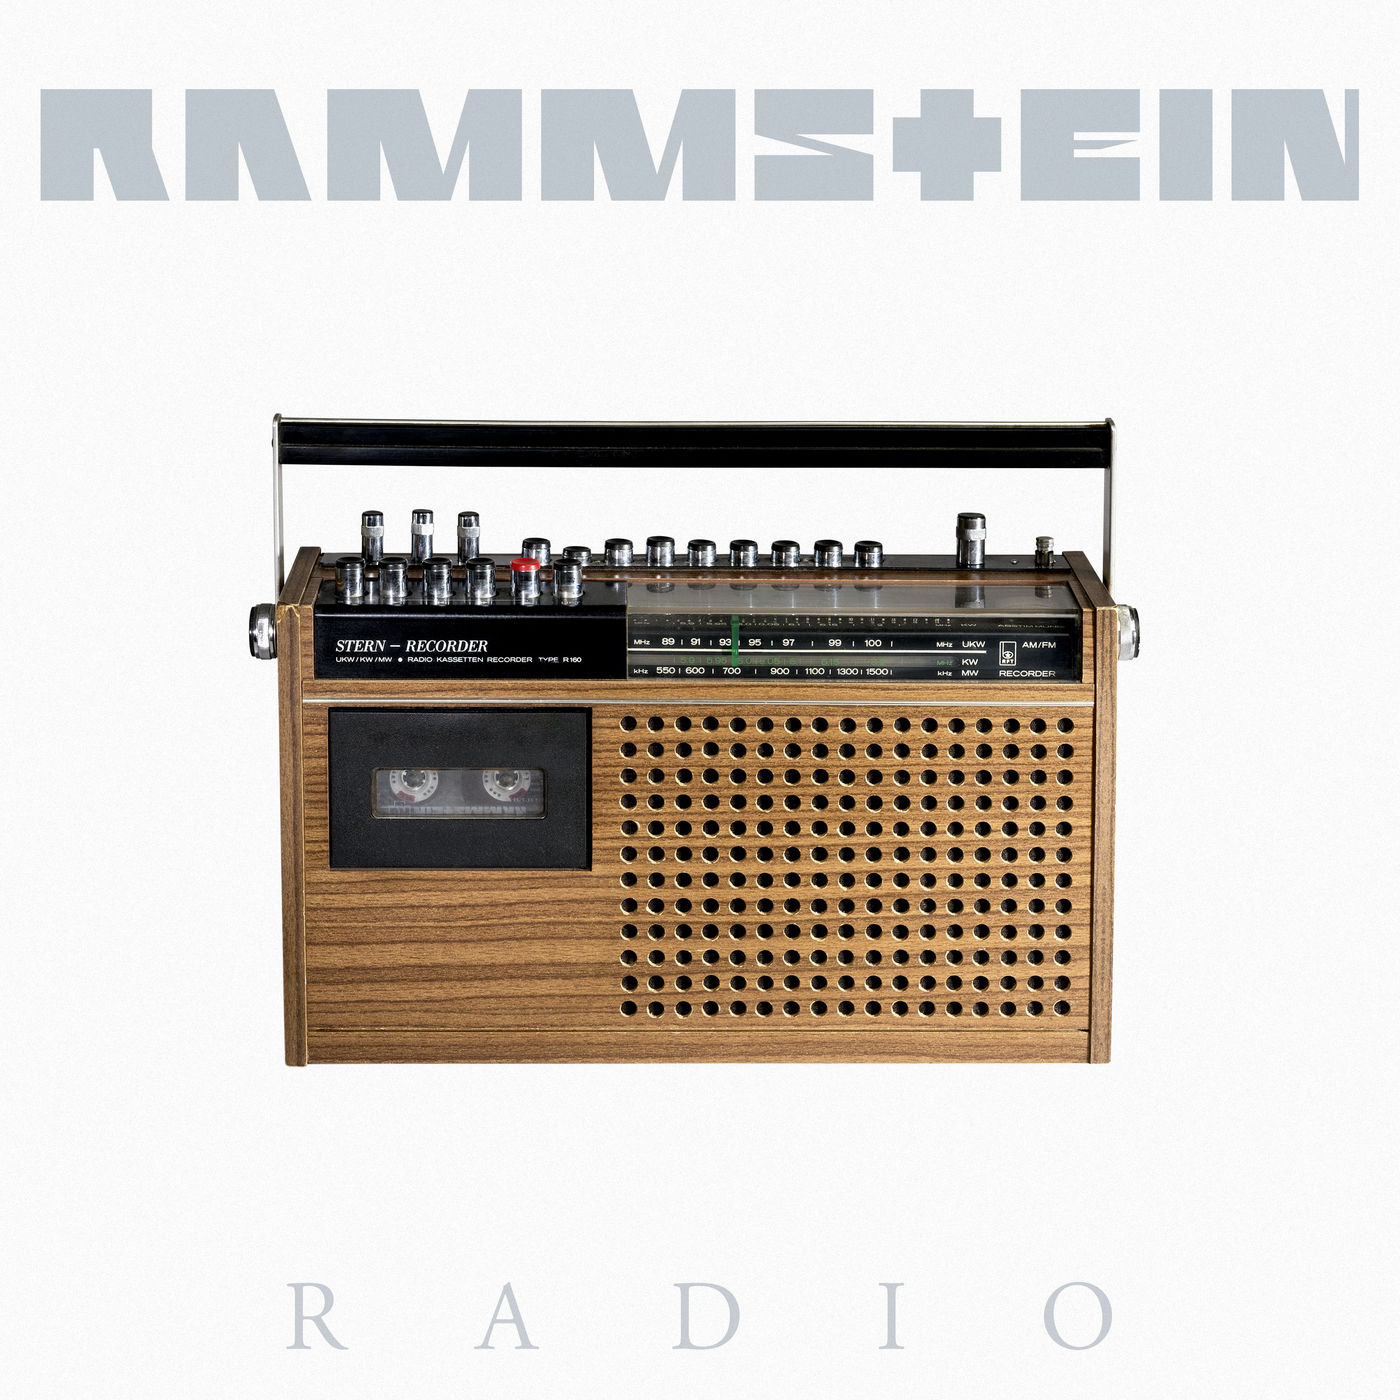 Rammstein - Radio [клип] (2019) WEBRip 1080p